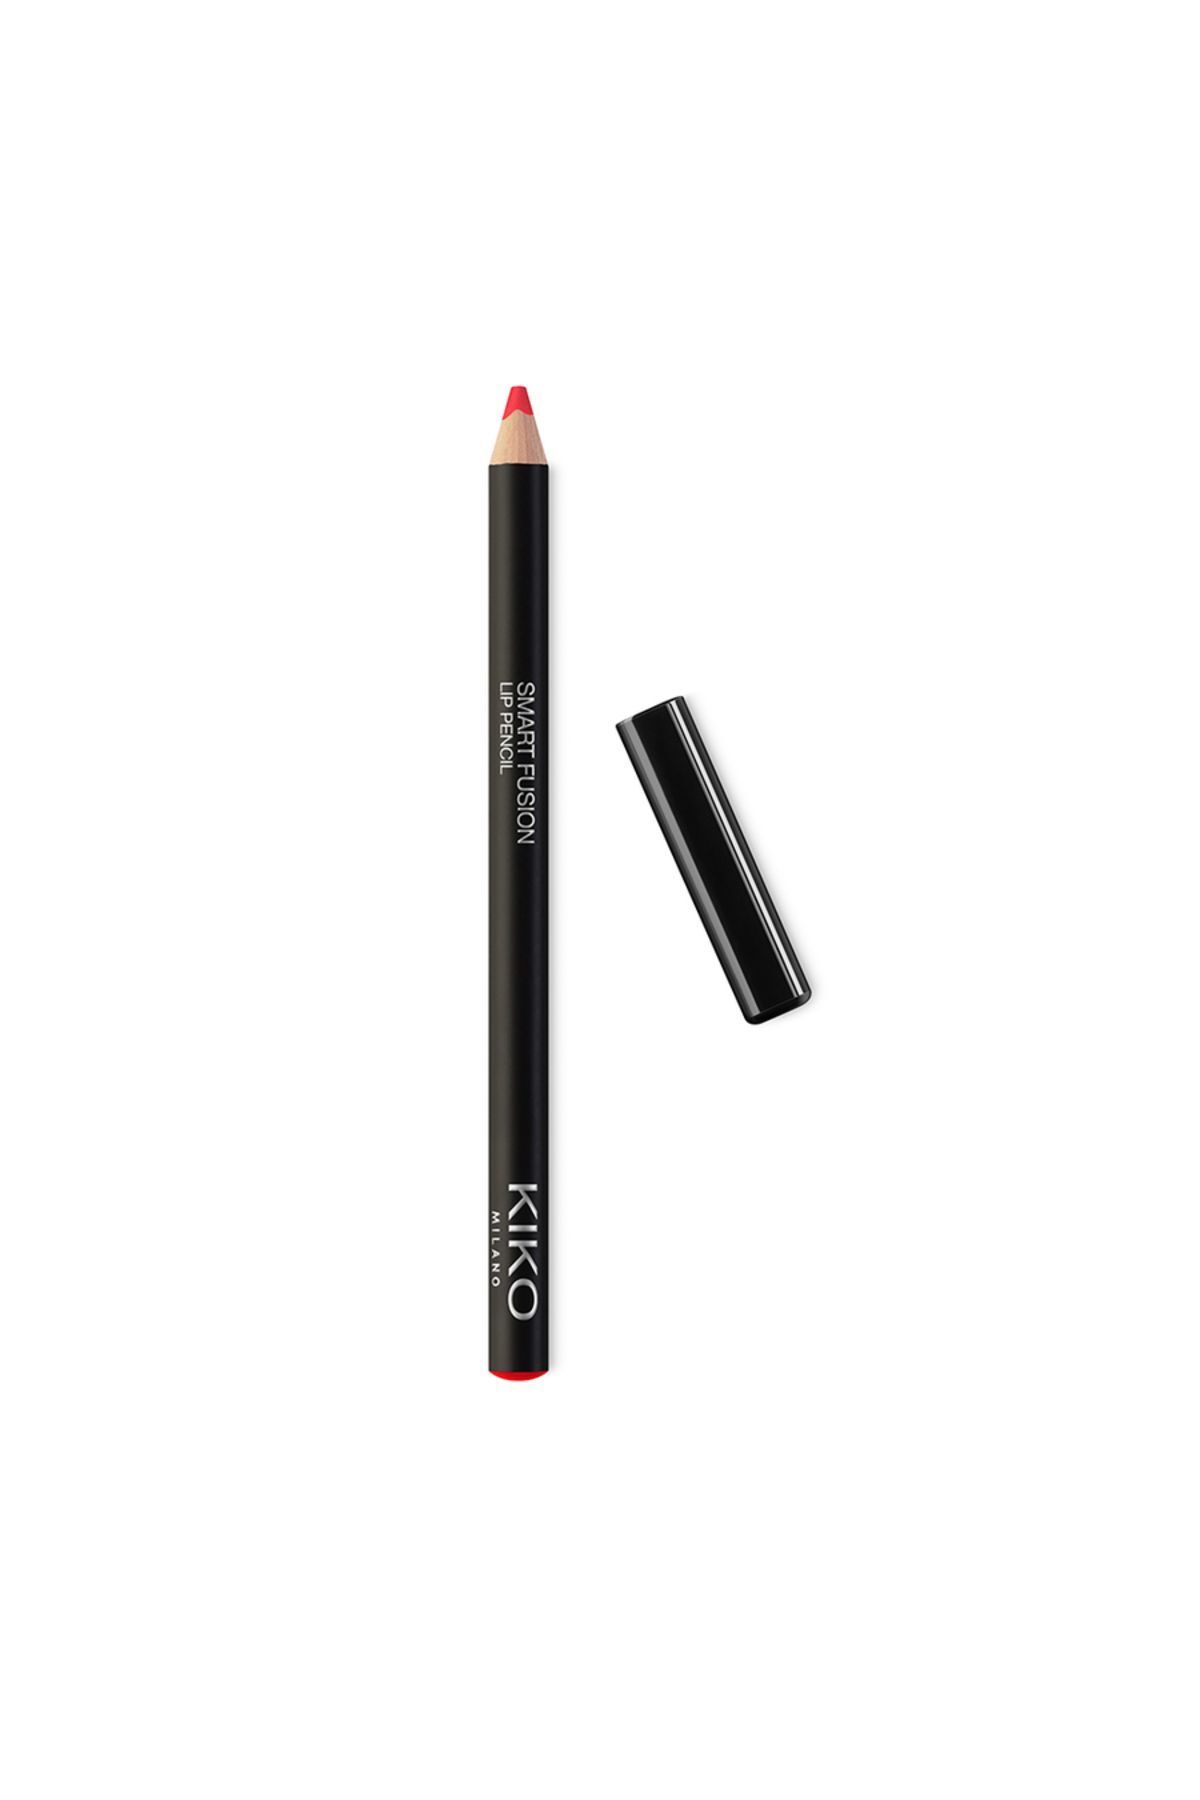 KIKO DUDAK KALEMİ - Smart Fusion Lip Pencil - 523 Magenta